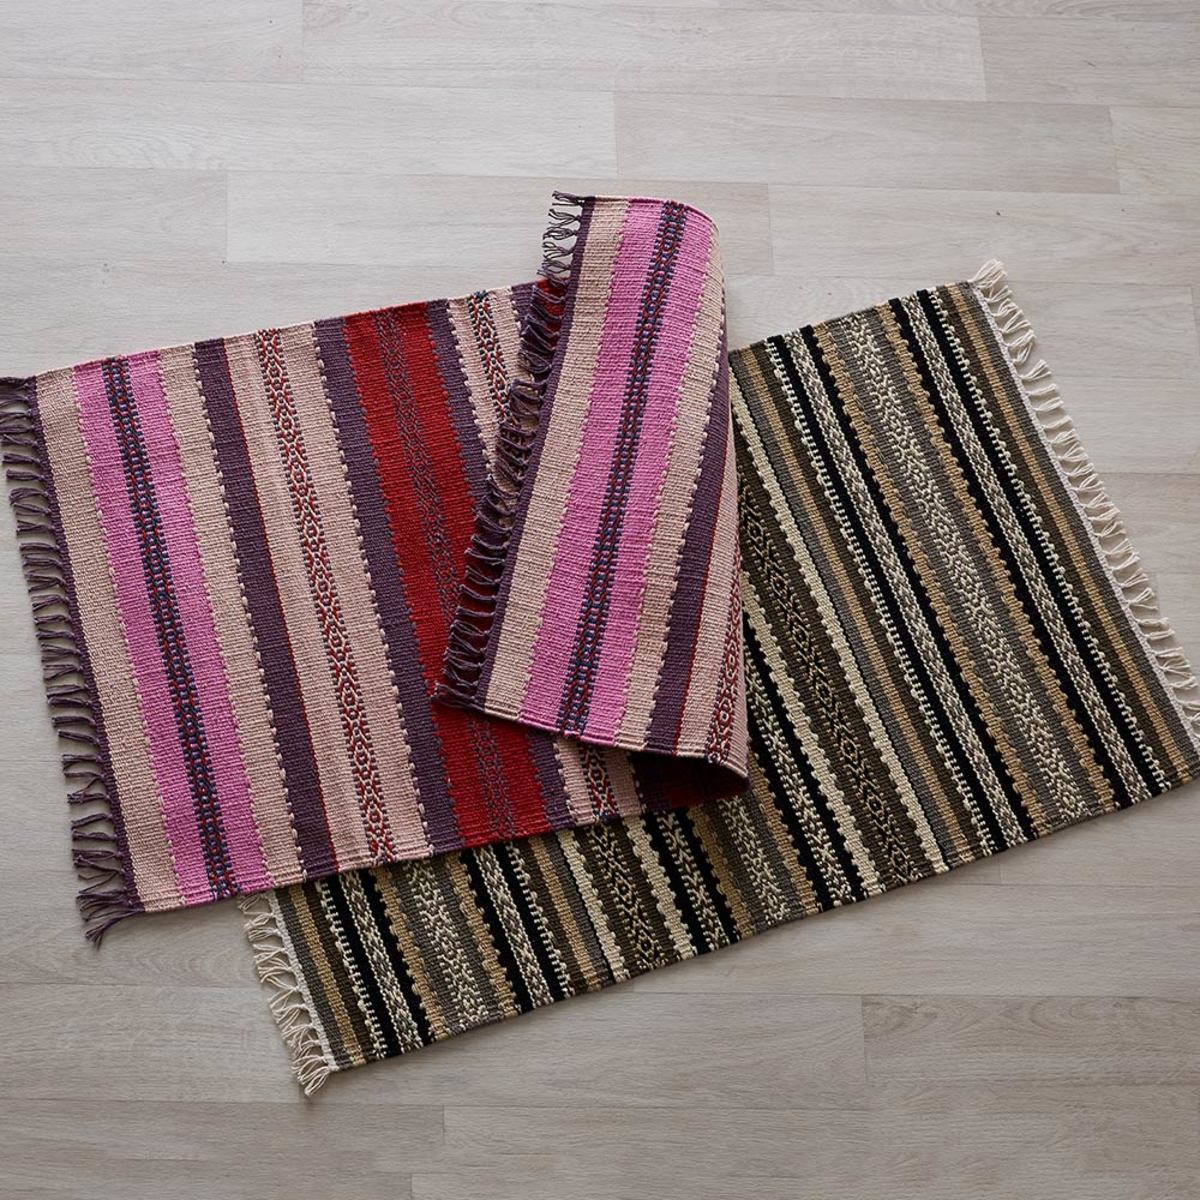 Handwoven Cotton Striped Small Rug, 33"L x 21"W - Rose Stripe